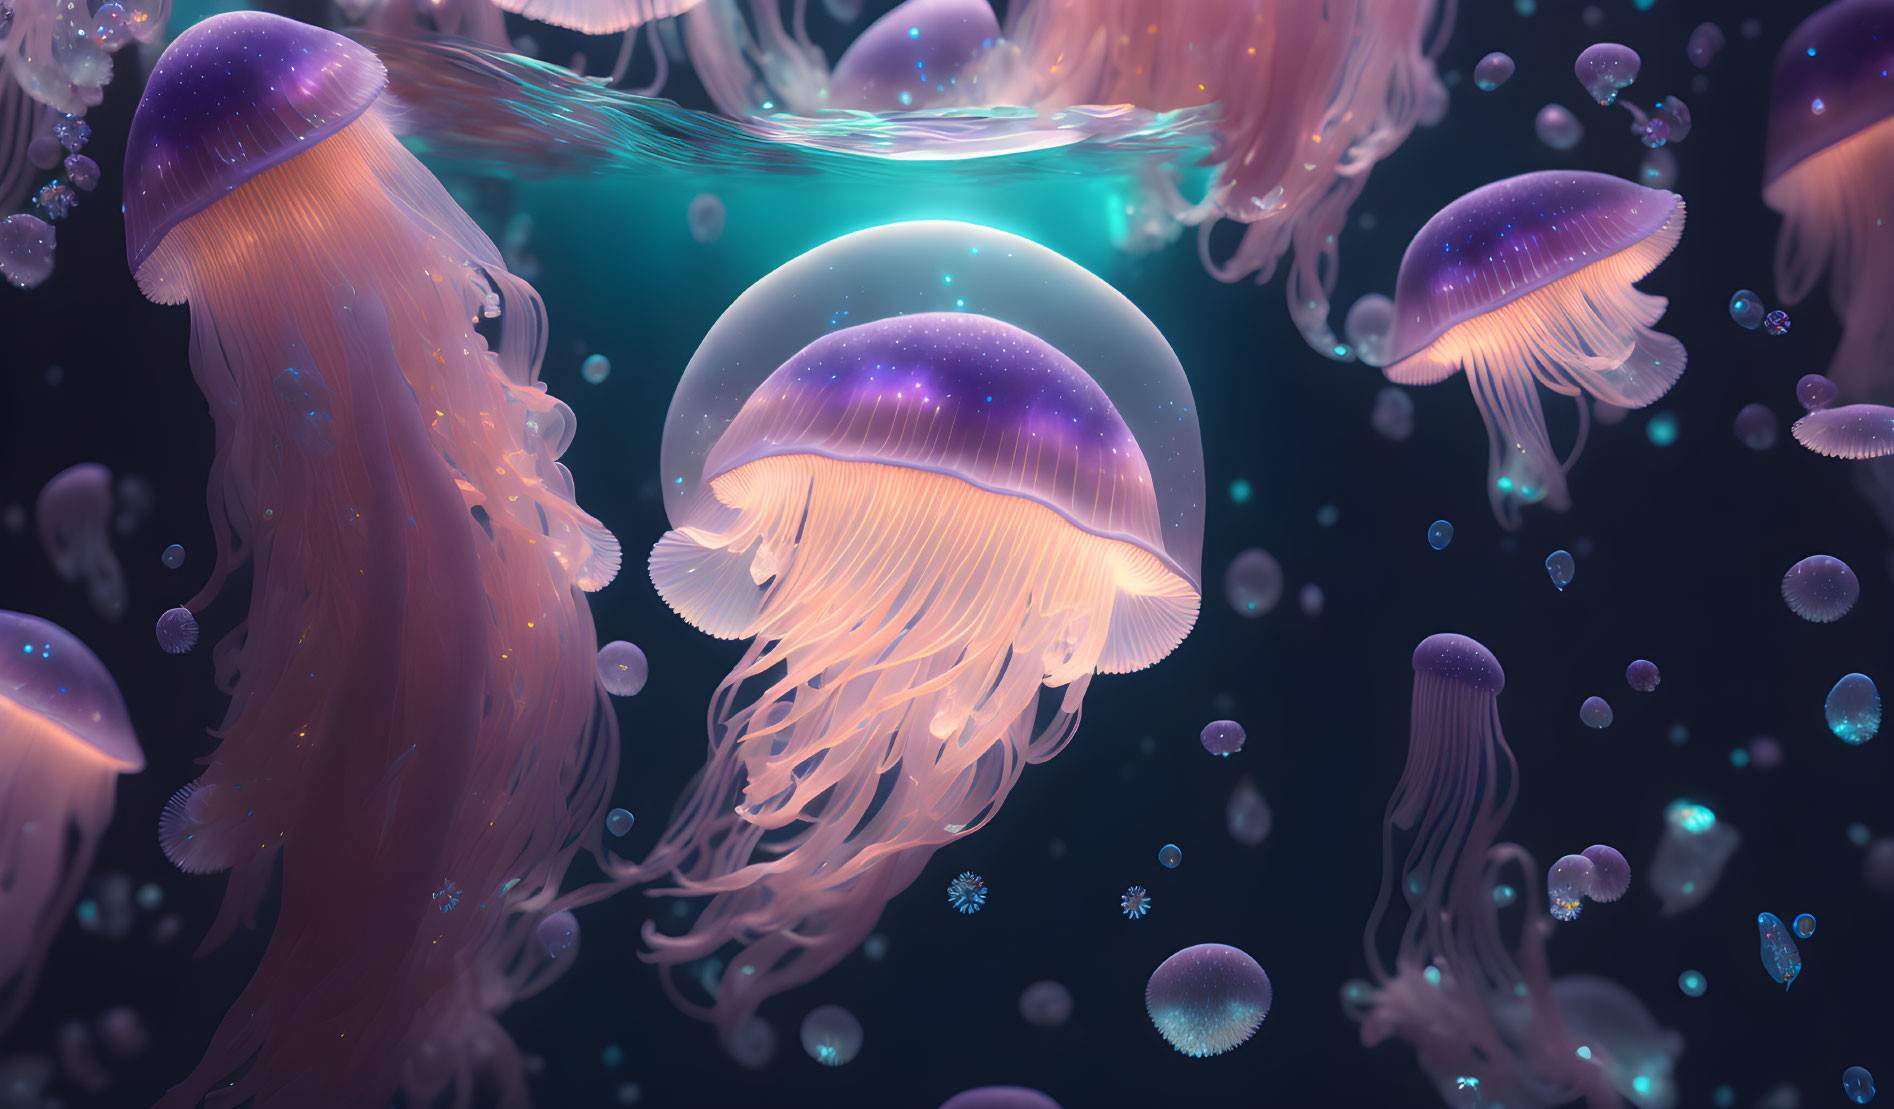 Bioluminescent jellyfish with radiant tentacles in underwater marine scene